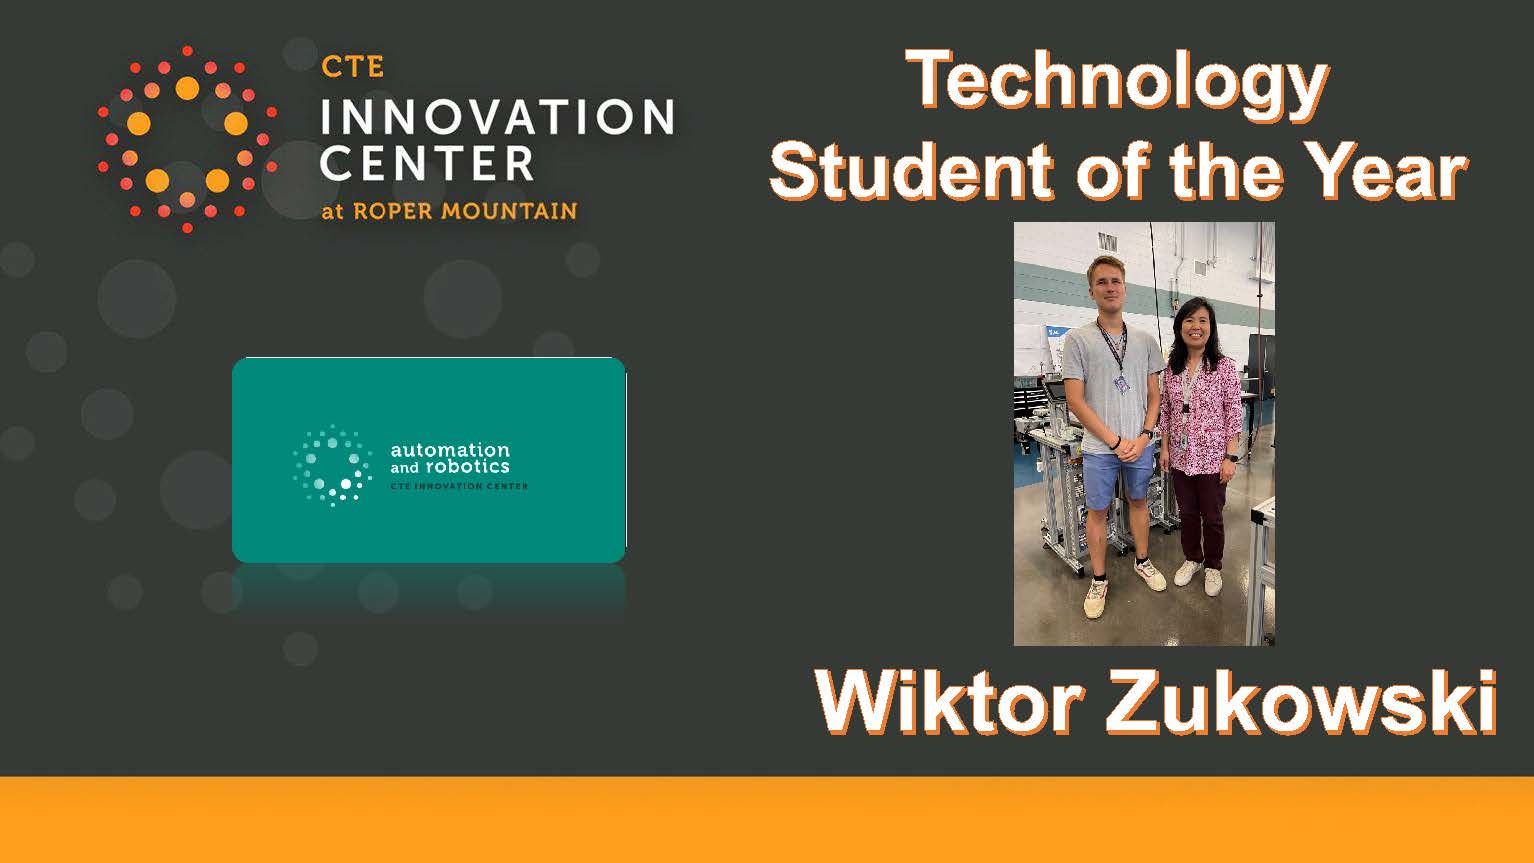 Technology Student of the Year Wiktor Zukowski